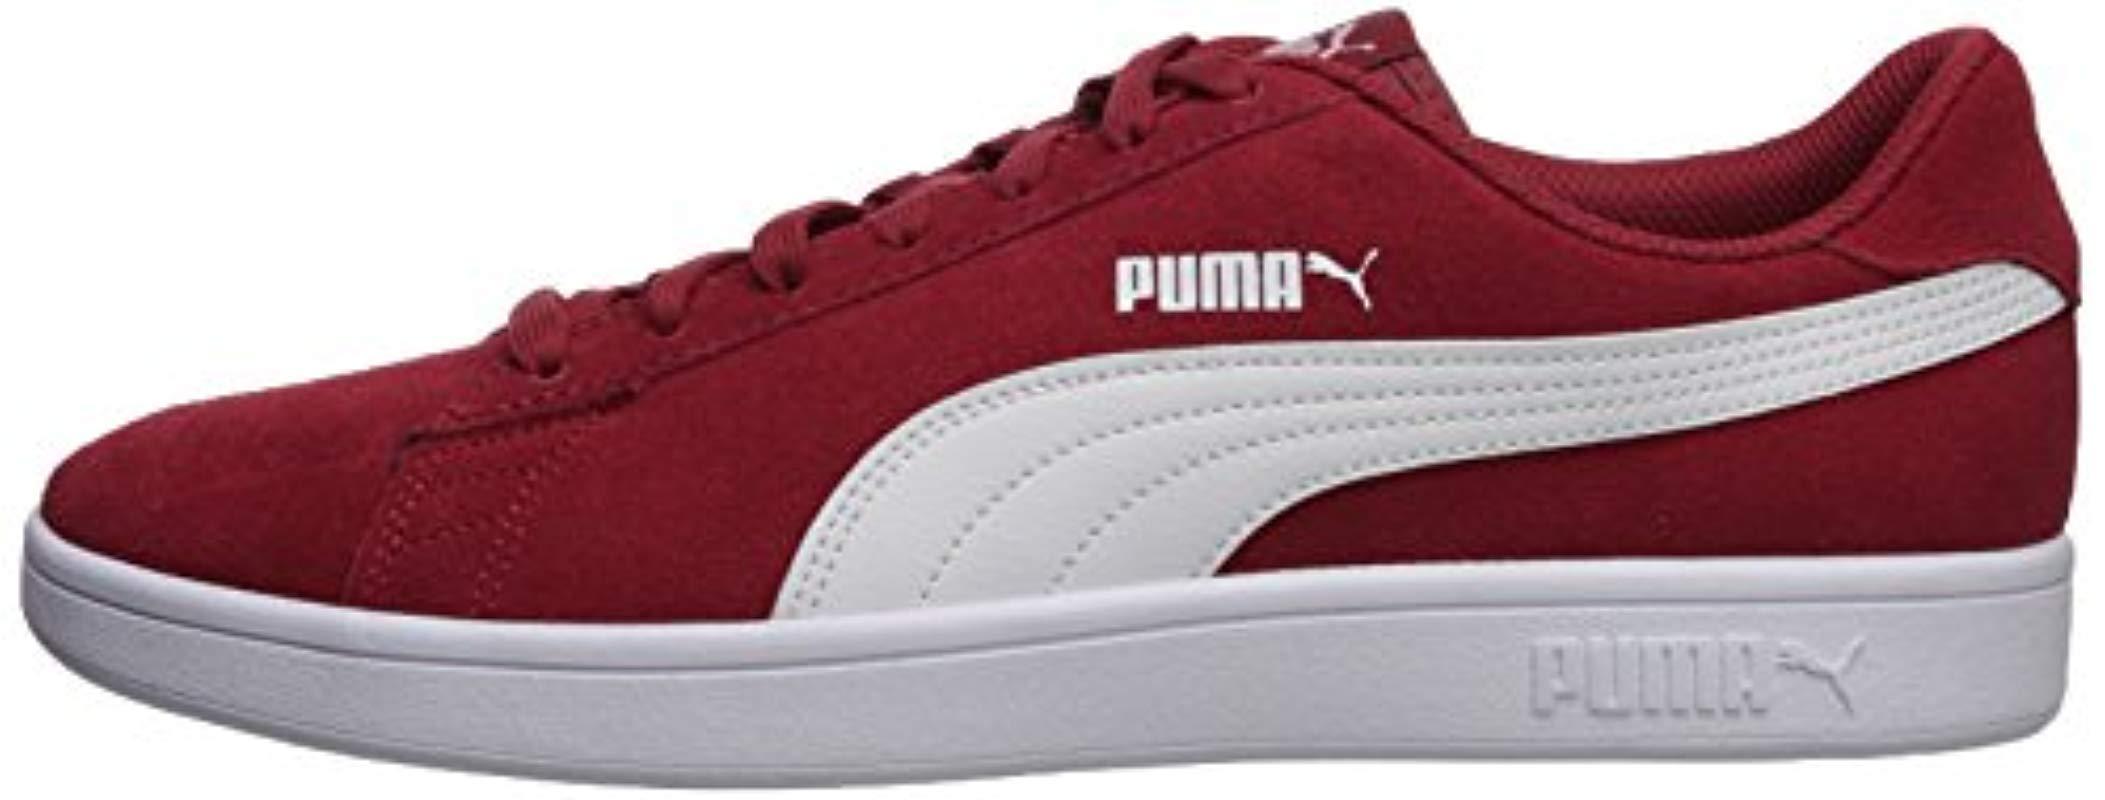 PUMA Suede Smash V2 Sneaker in Red for Men - Lyst